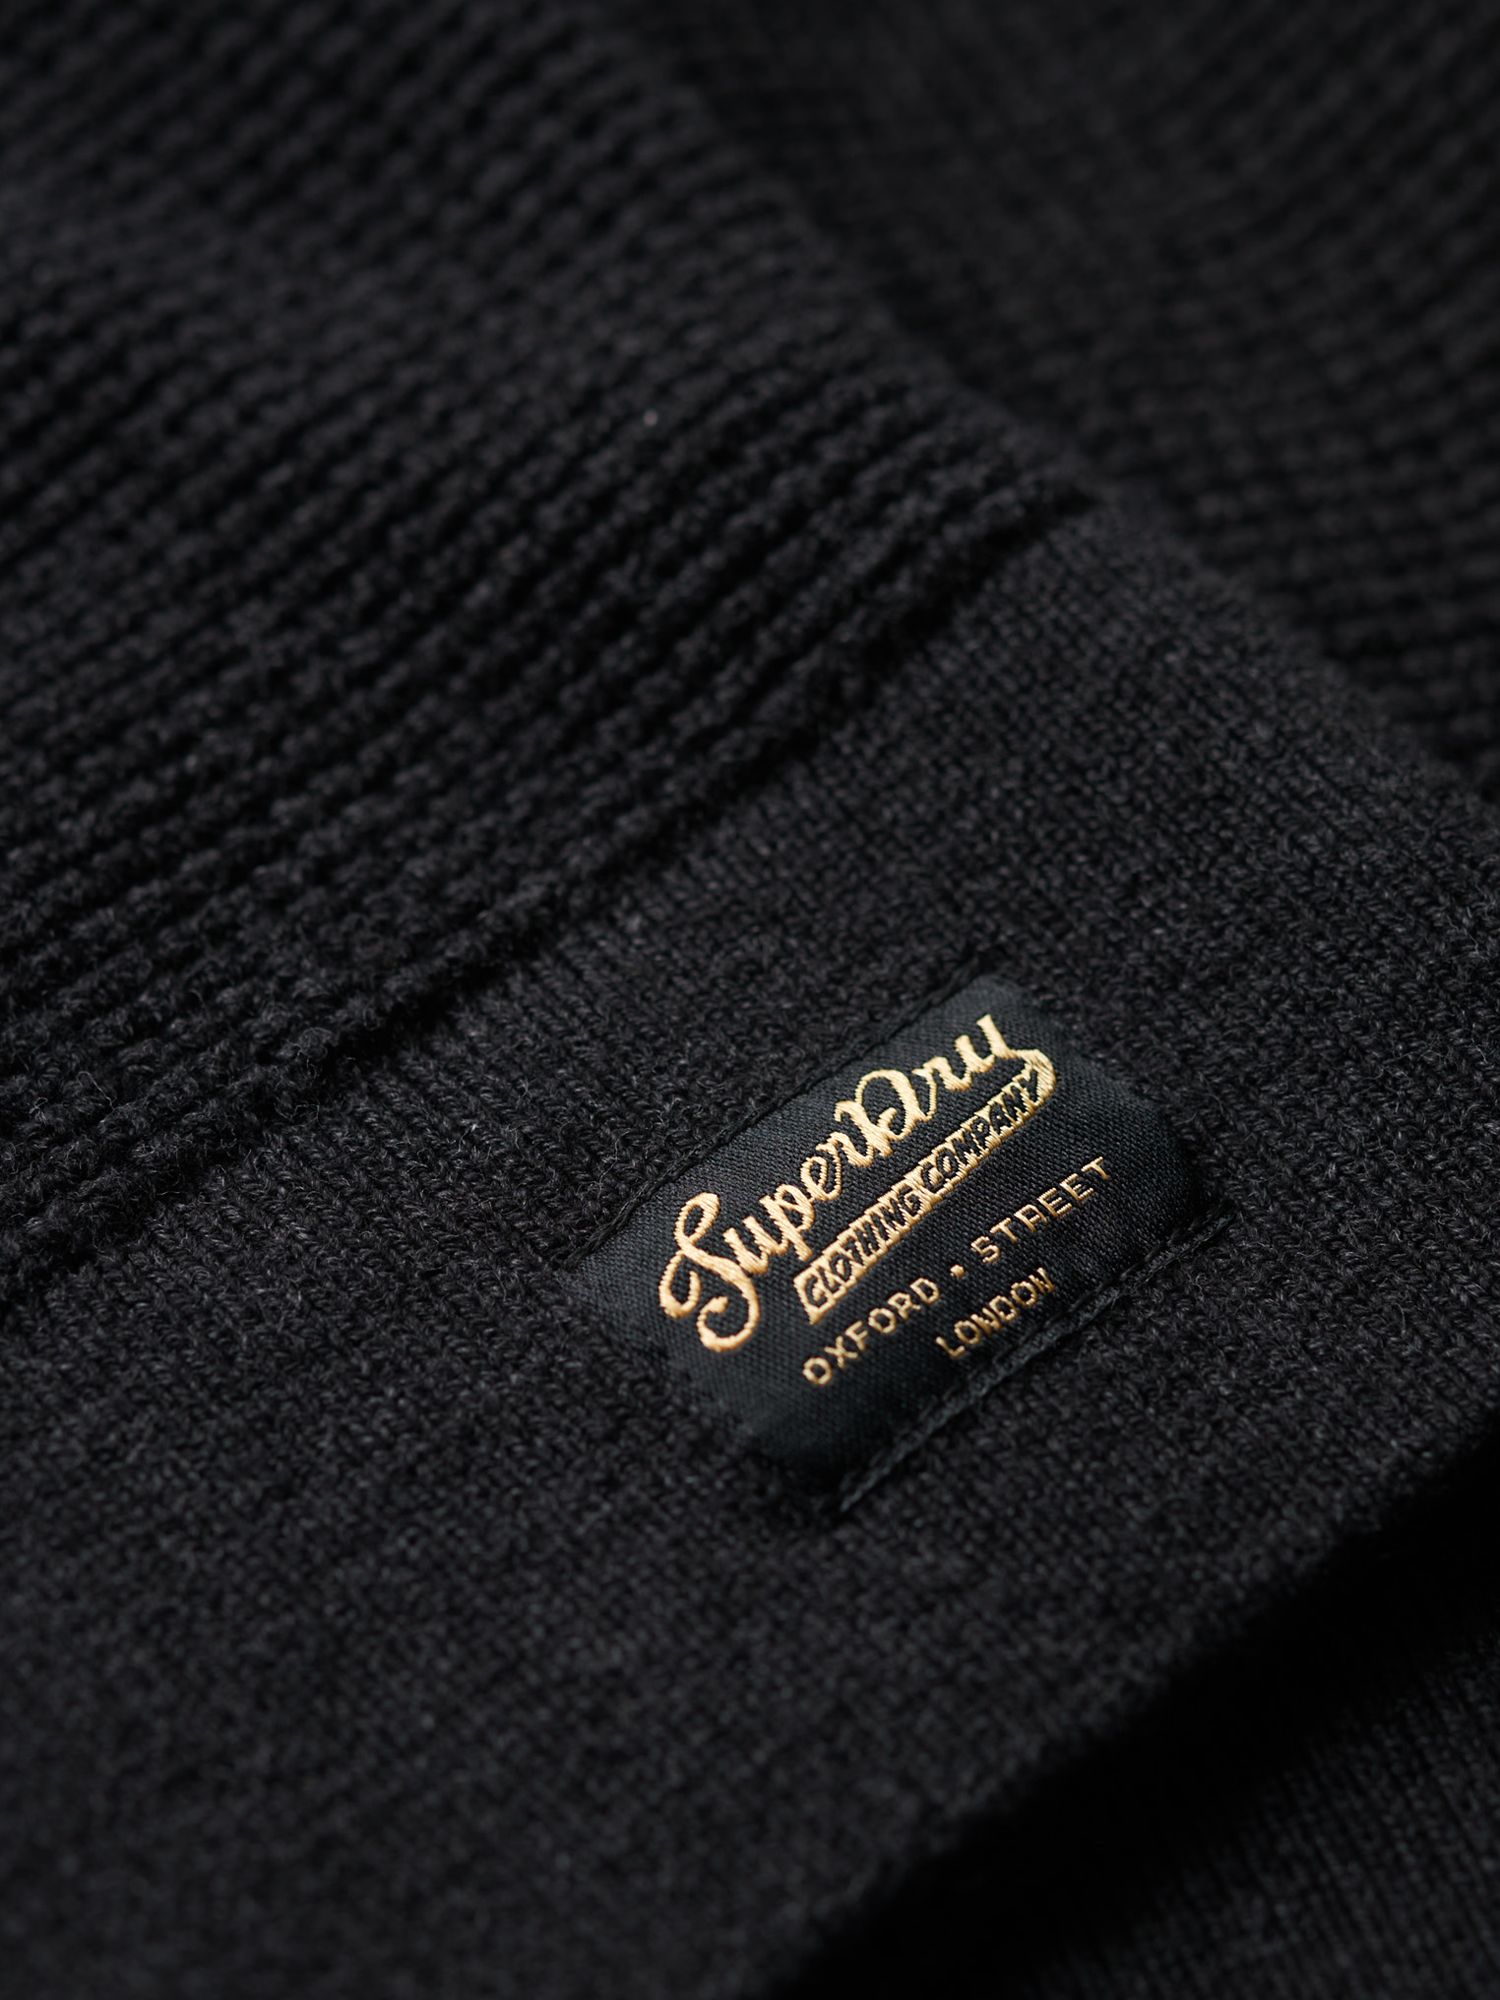 Buy Superdry Textured Crew Knit Jumper Online at johnlewis.com